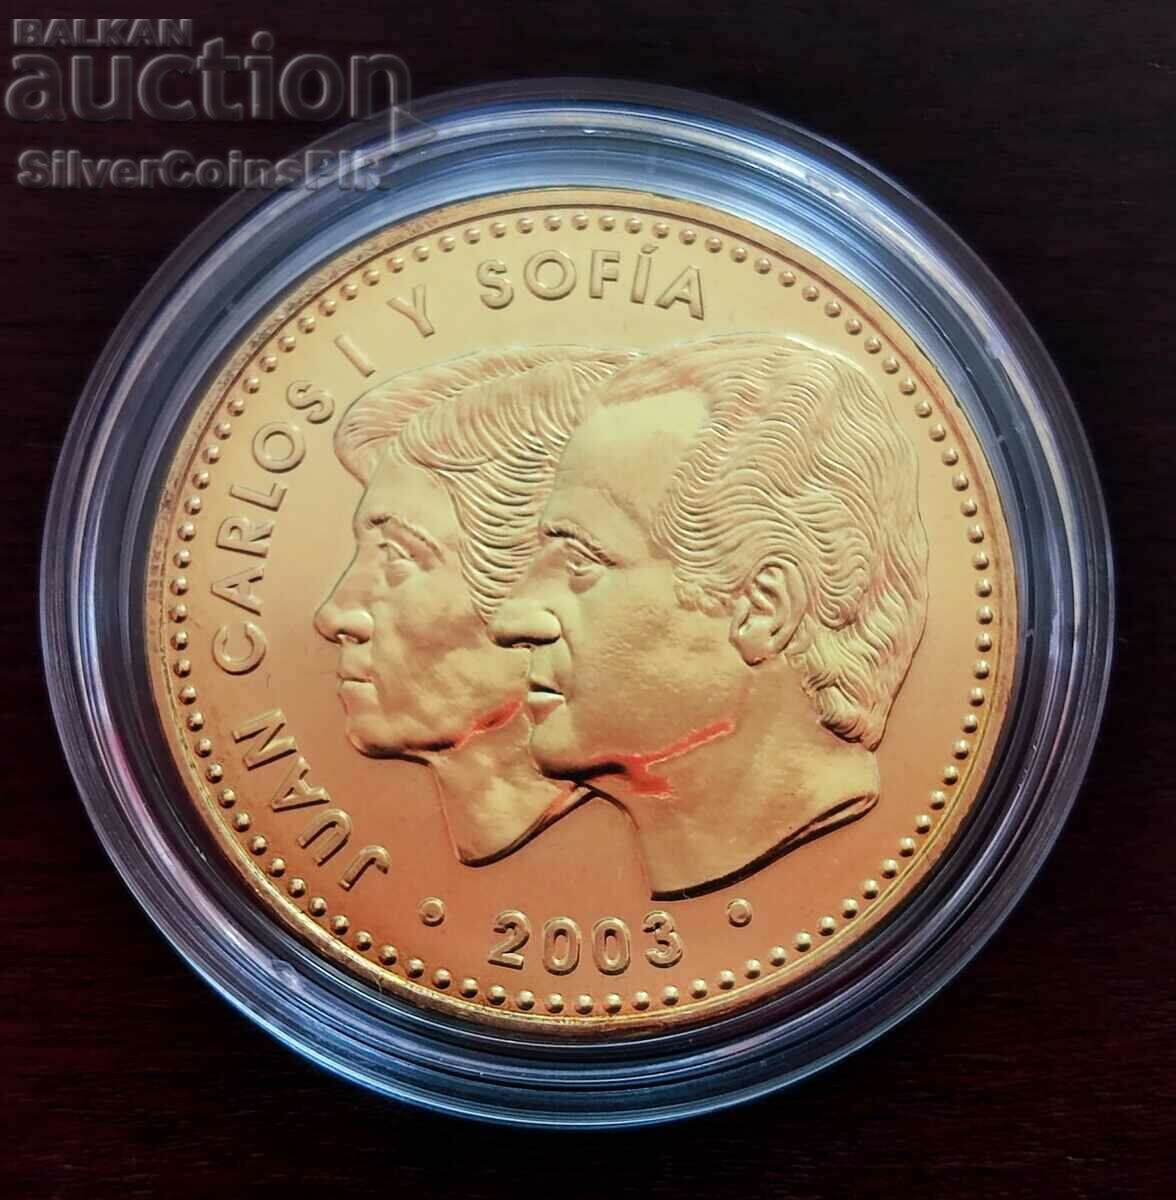 Argint 12 Euro Carlos și Sofia 2003 Spania